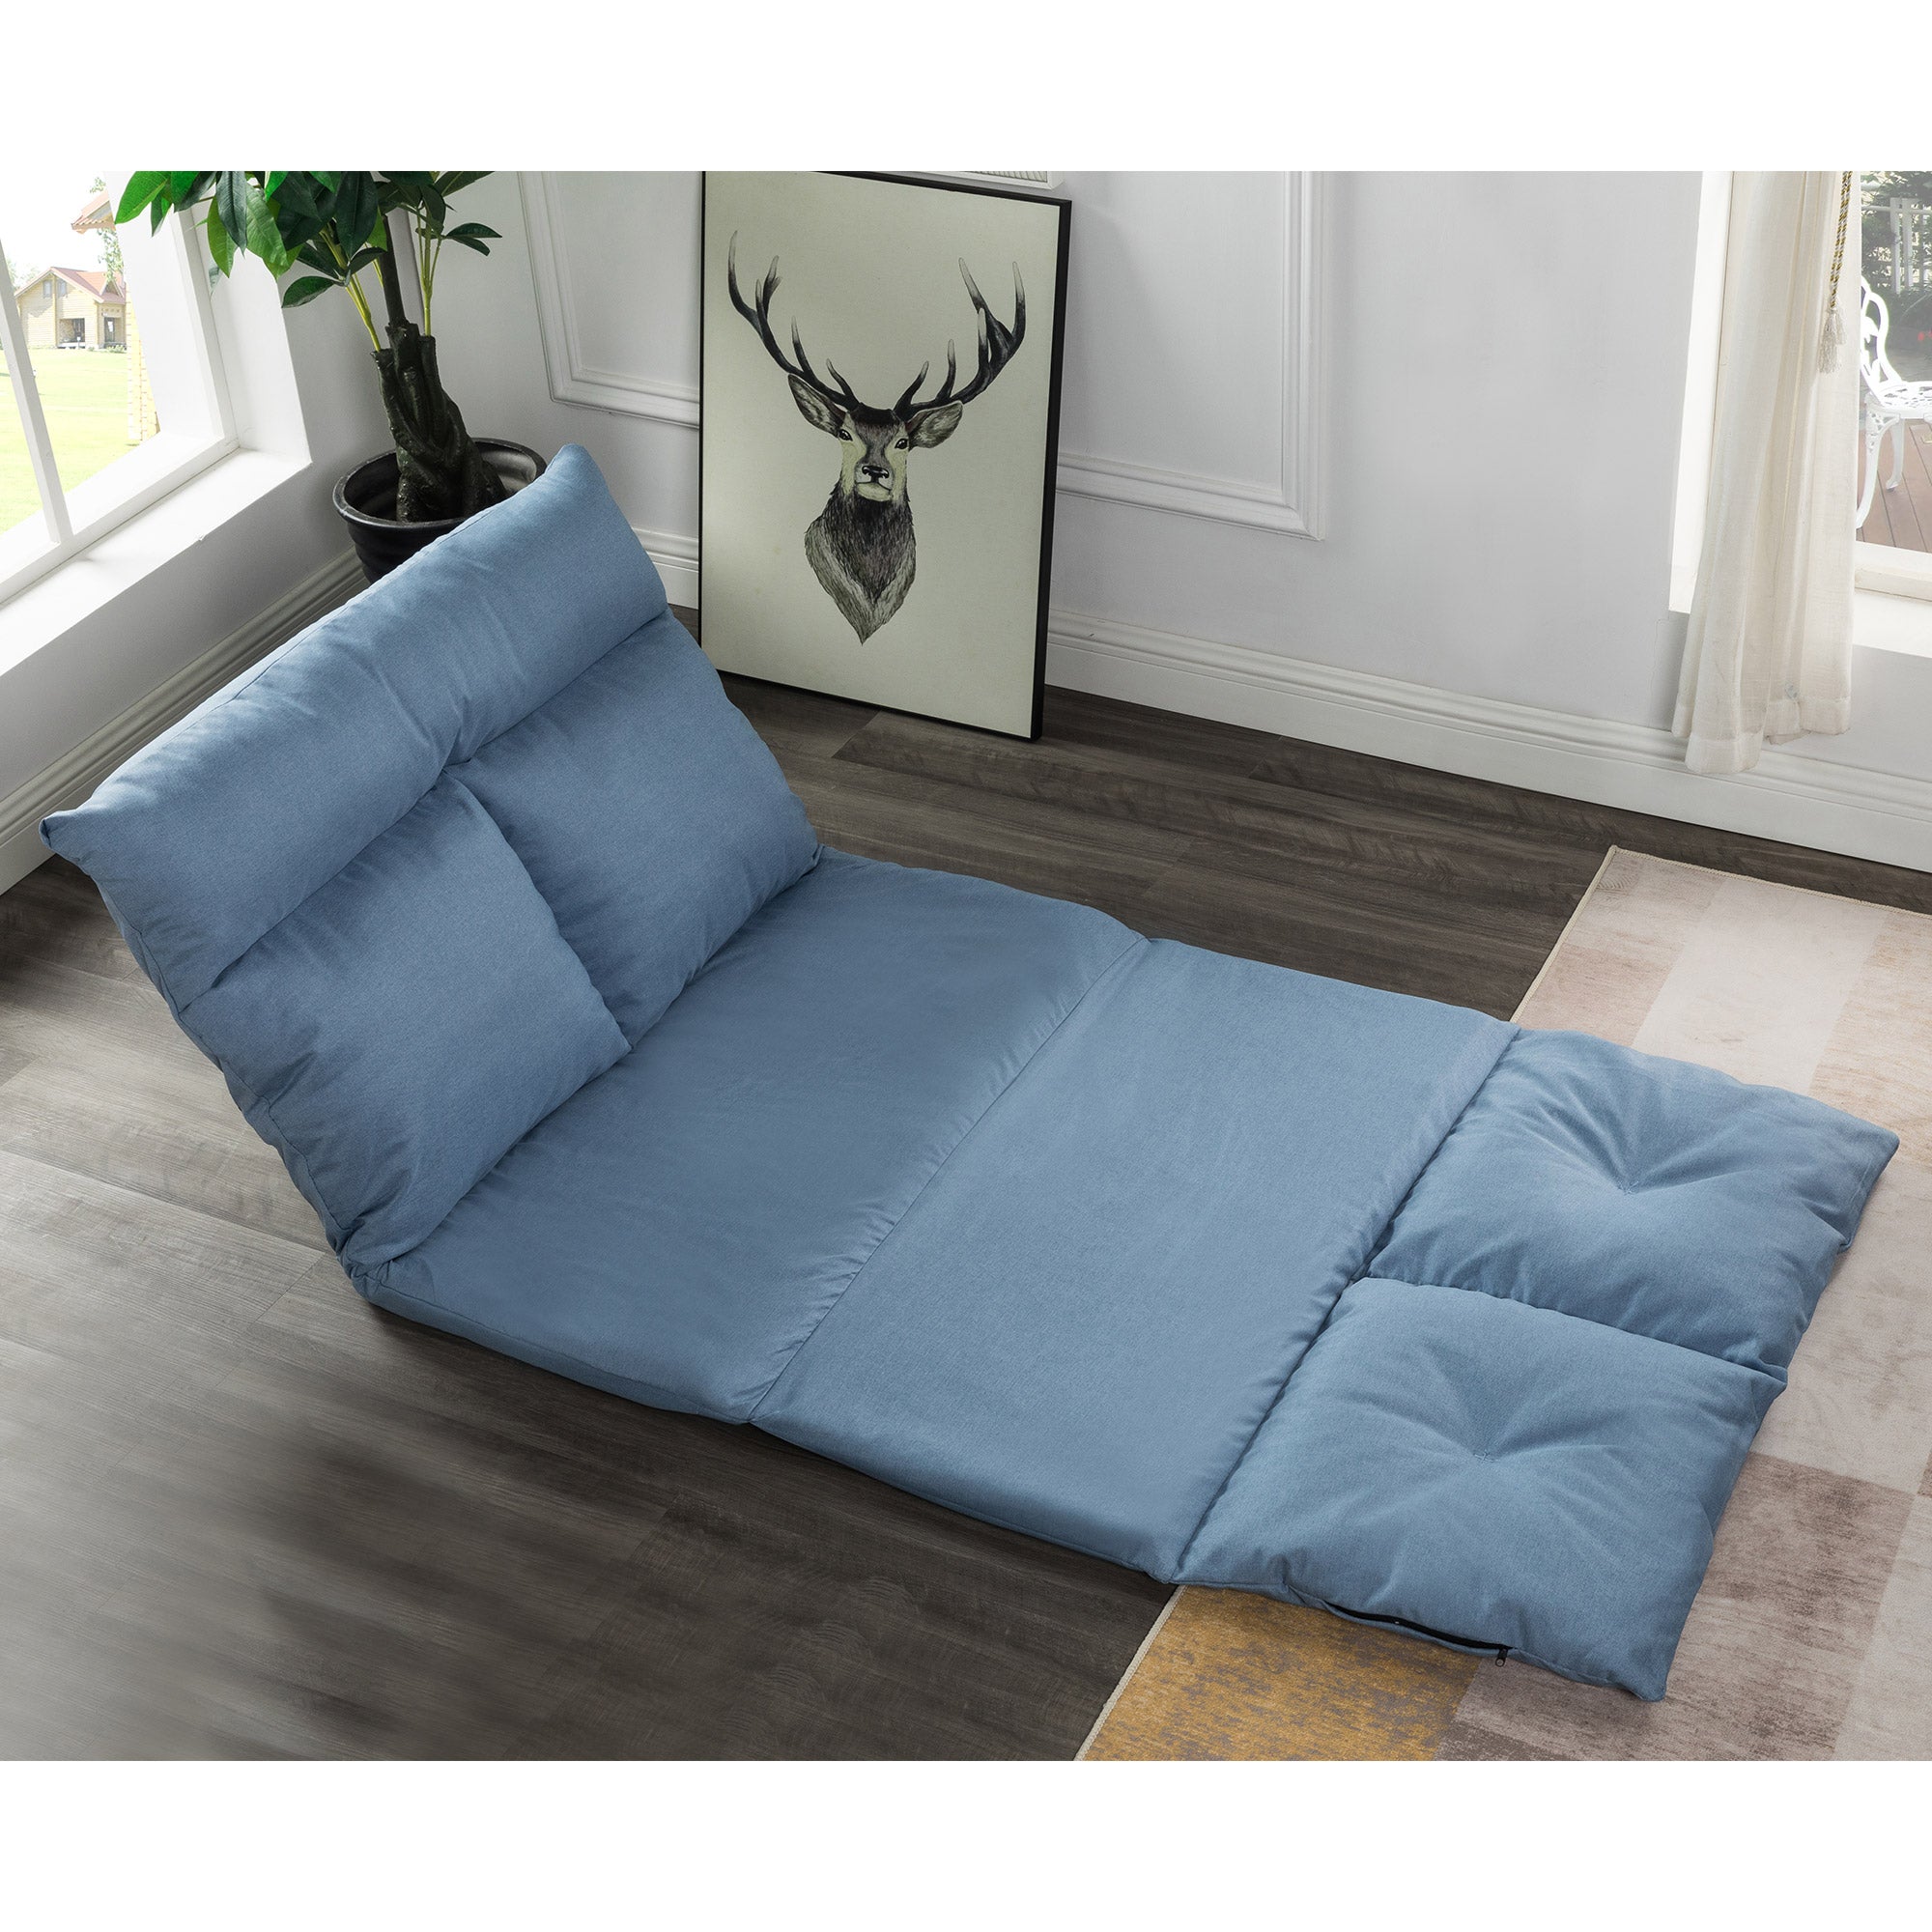 RaDEWAY Folding Futon Sofa Blue